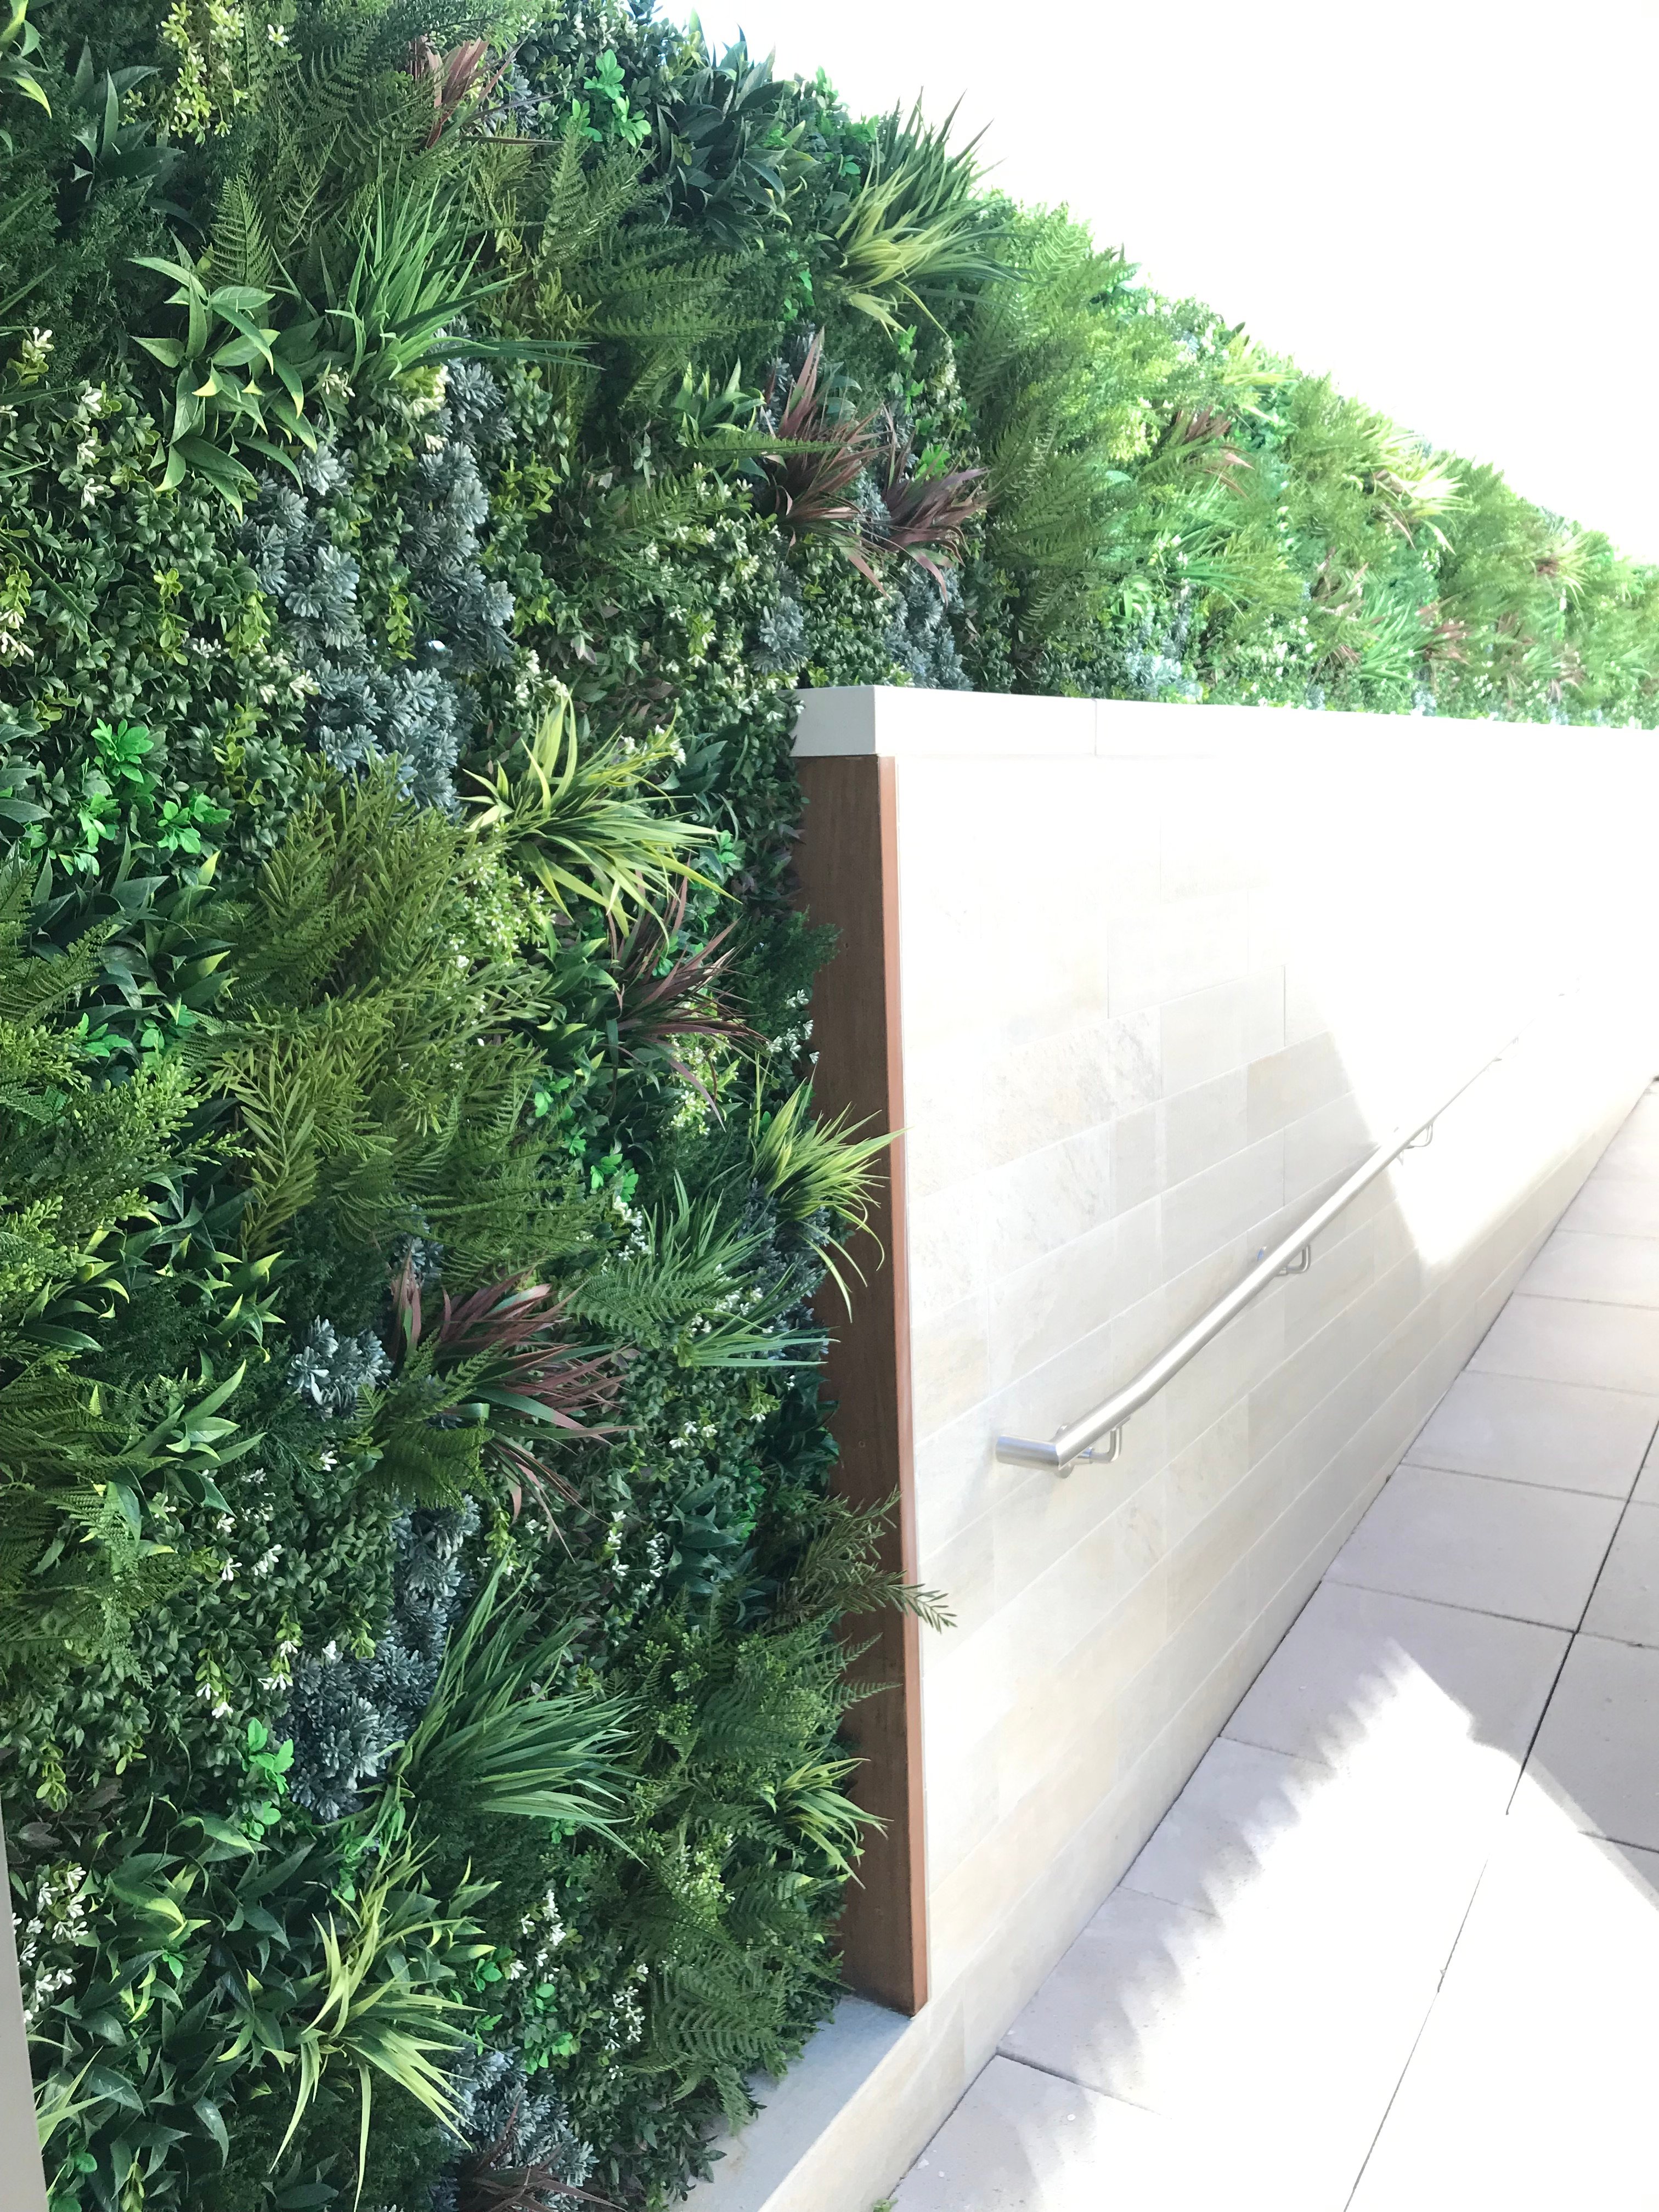 Seamless vertical garden look with green wall panels